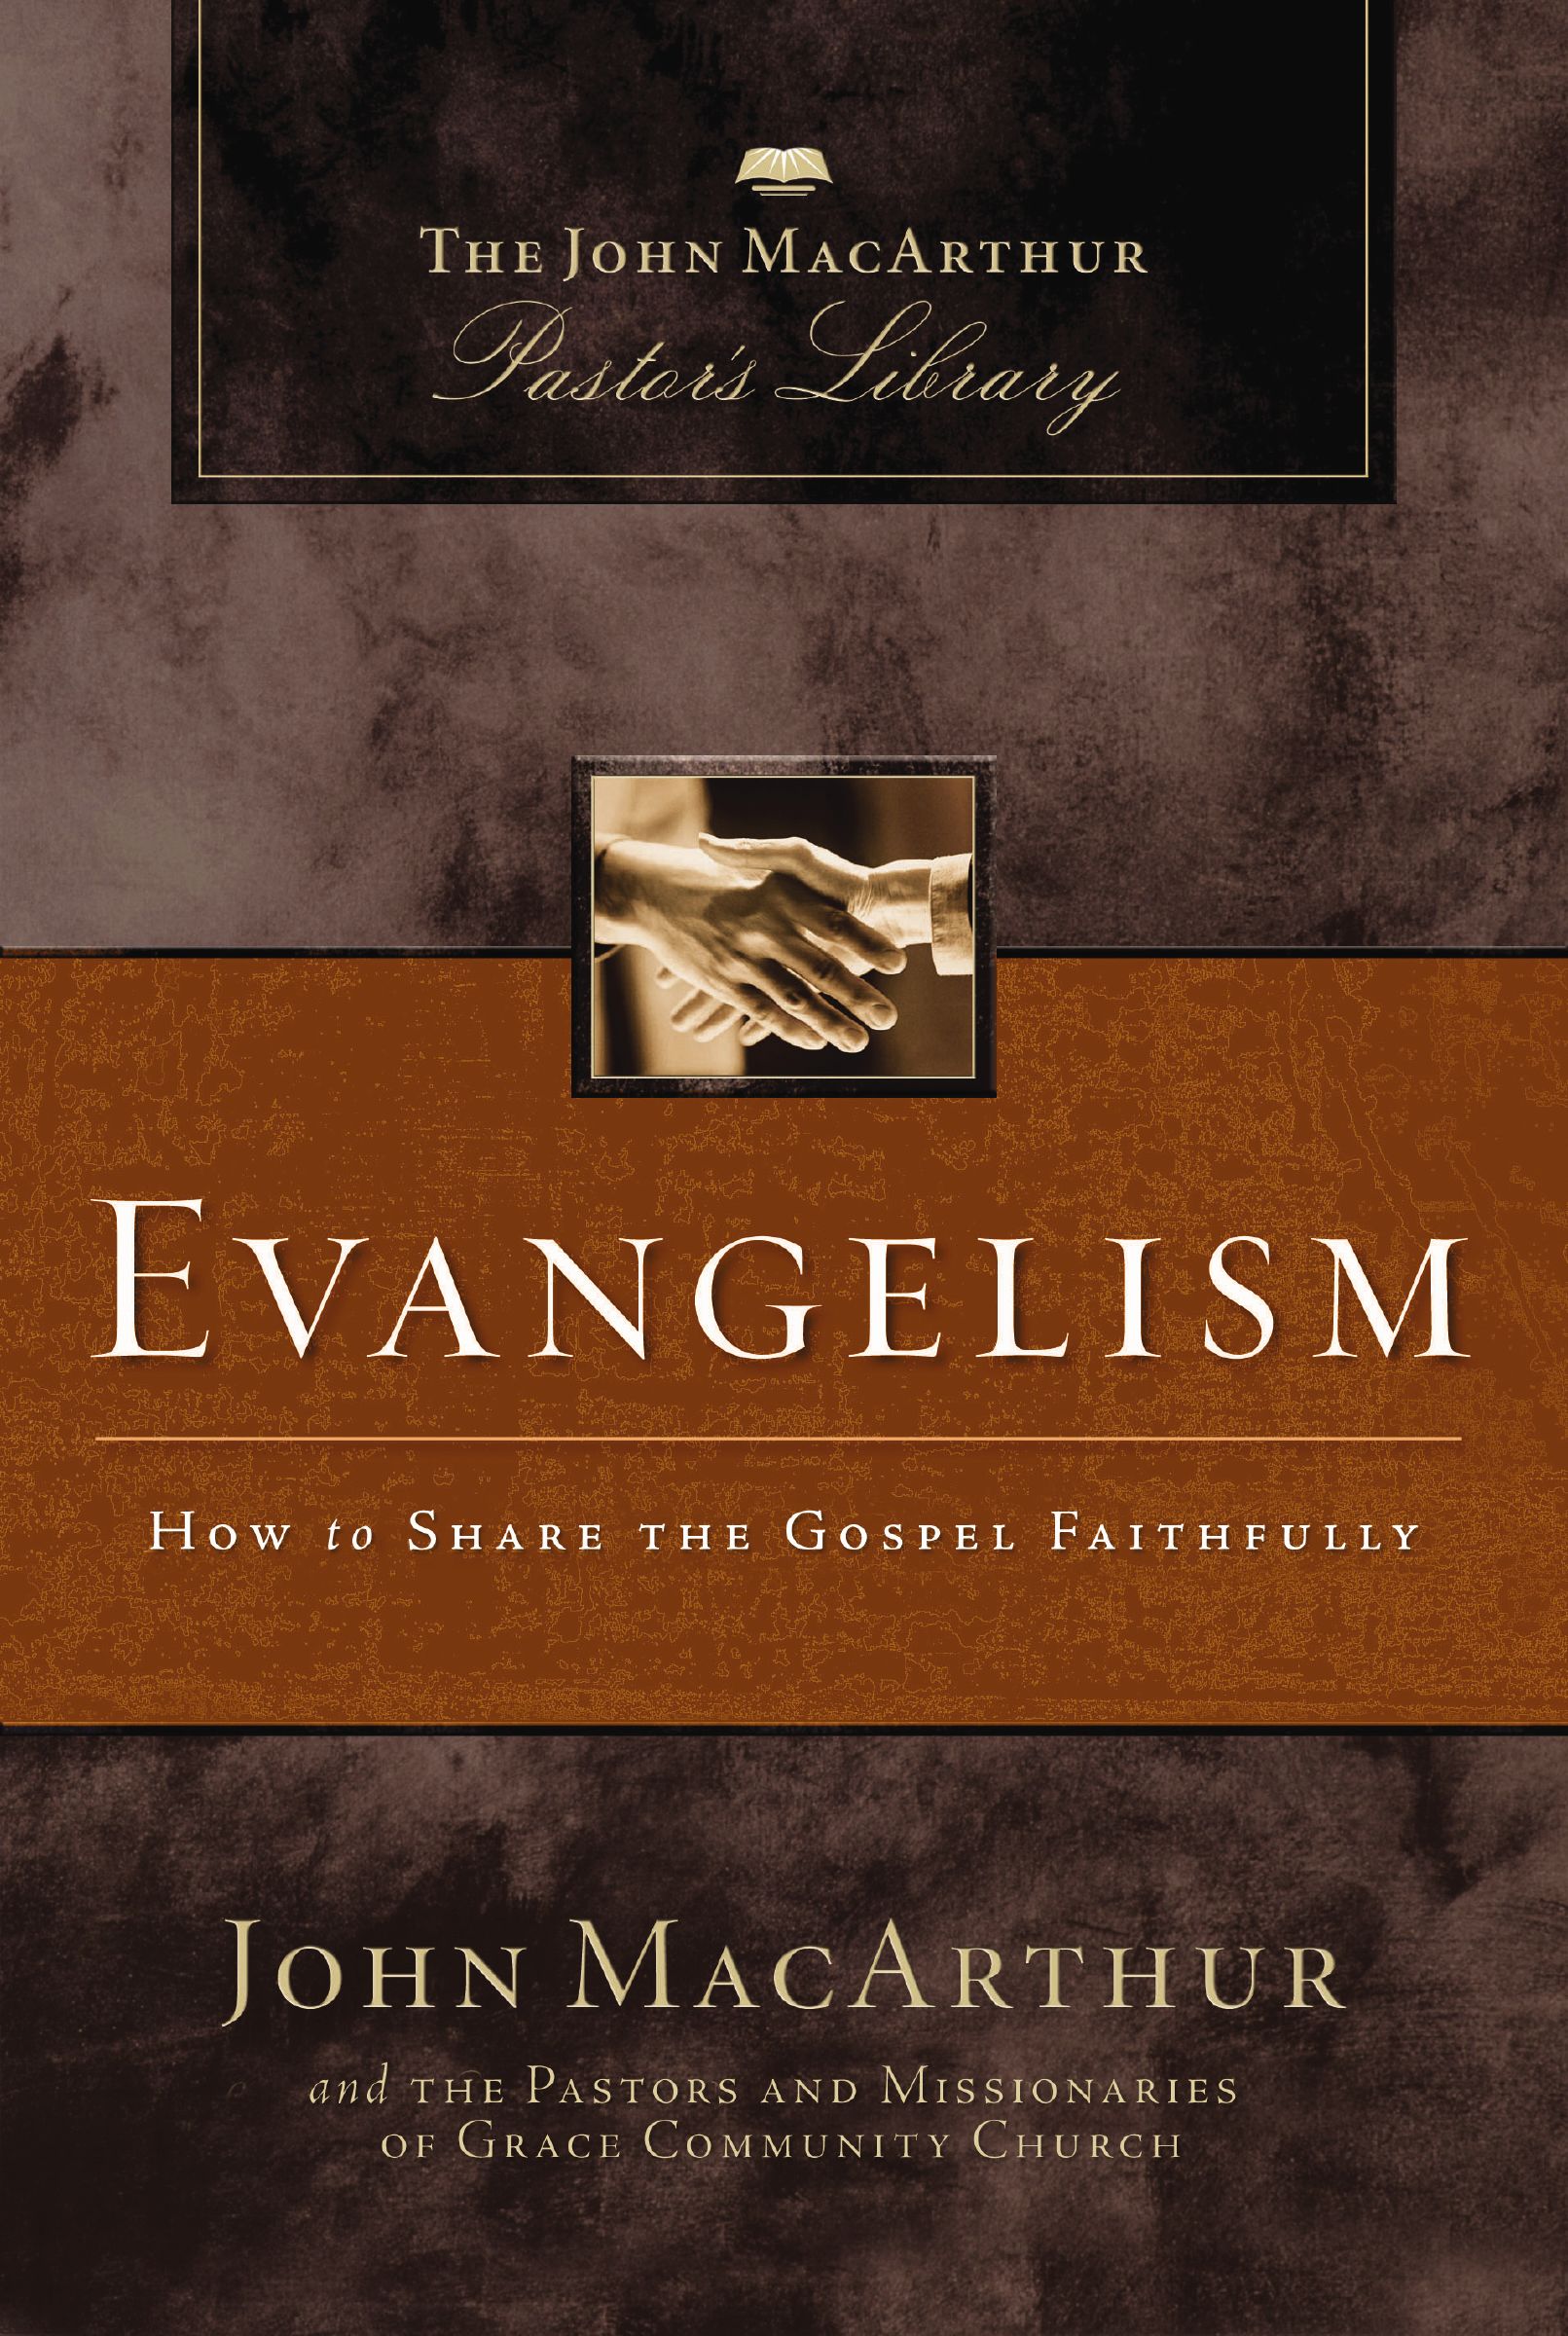 Evangelism: How to Share the Gospel Faithfully (MacArthur Pastor's Library)